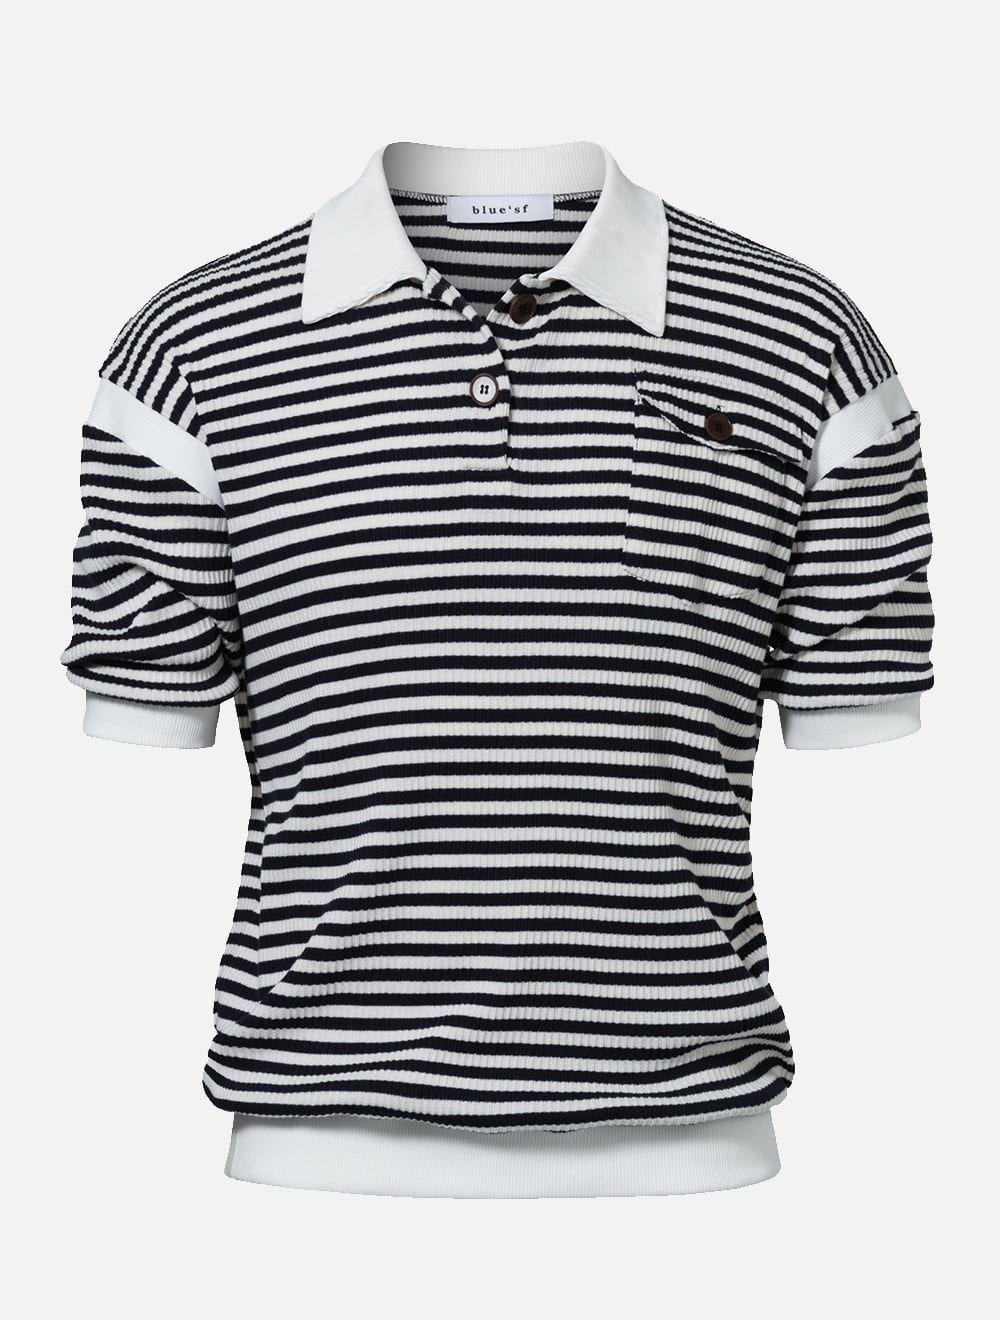 bluesf stripe pique t-shirt